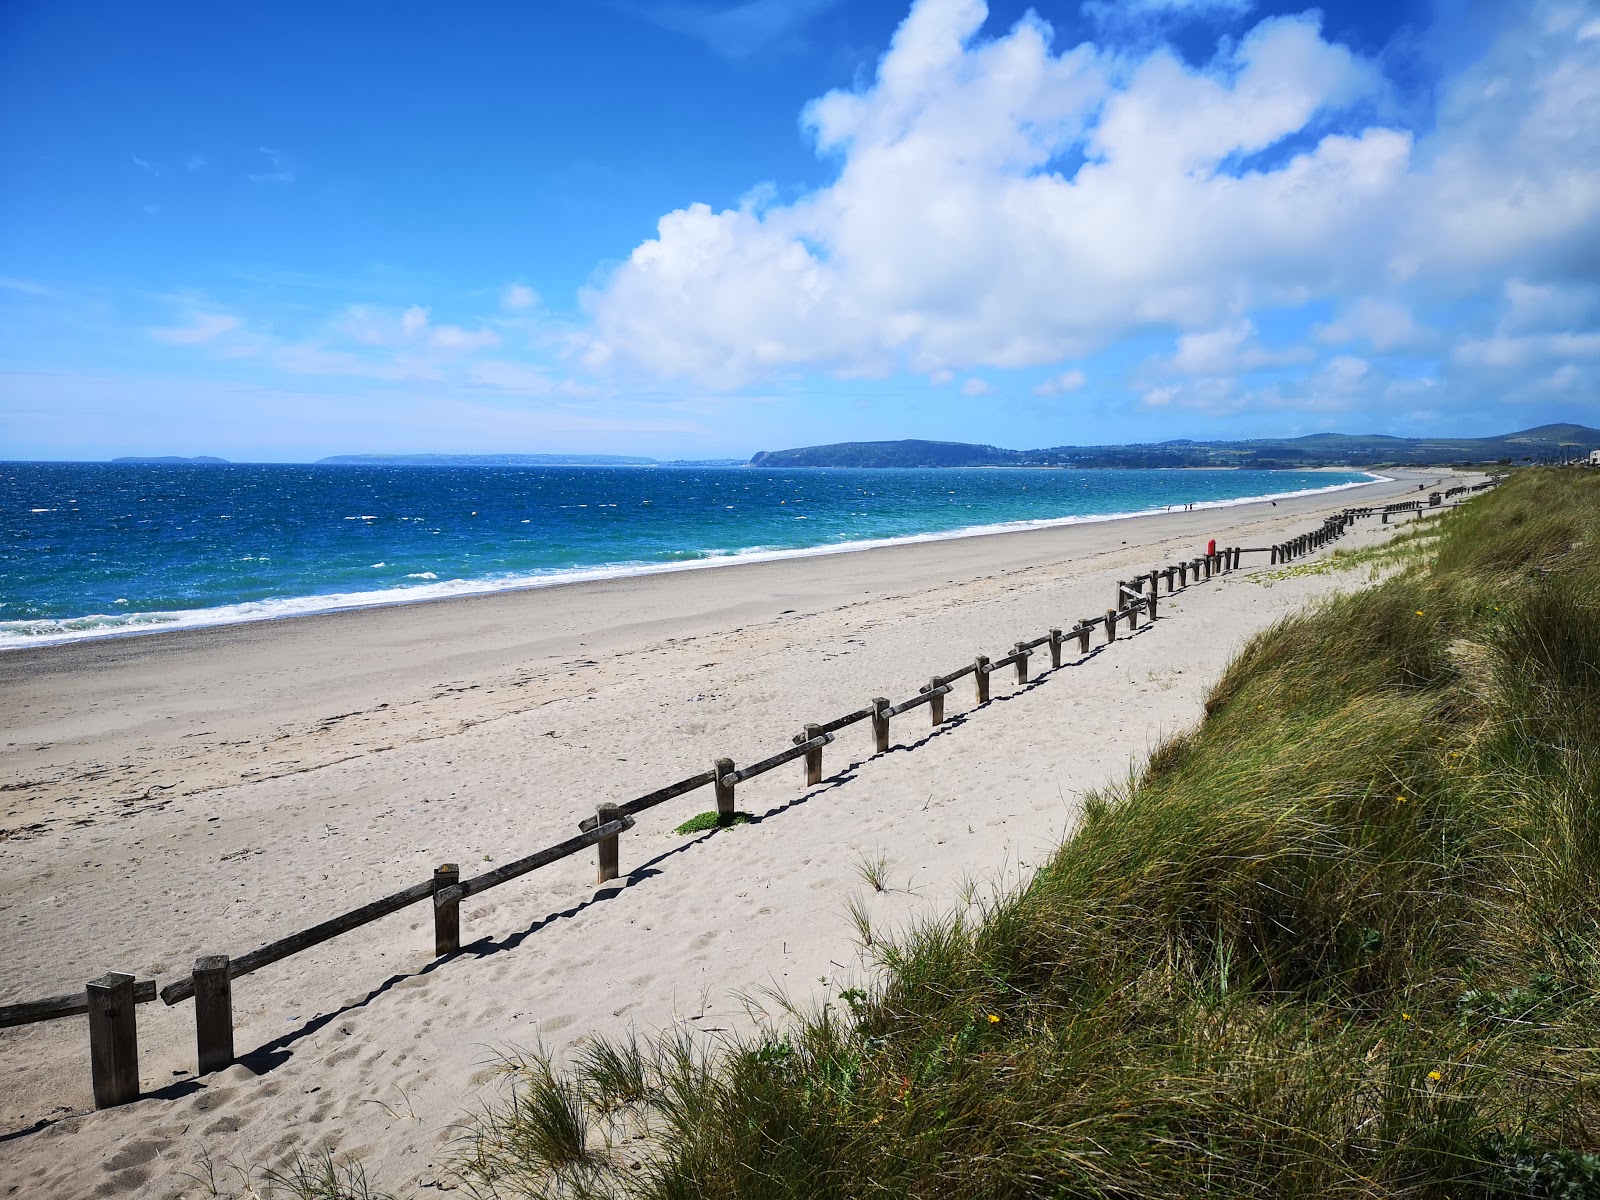 Fotografija Pwllheli plaža (Traeth Marian) z svetel pesek površino